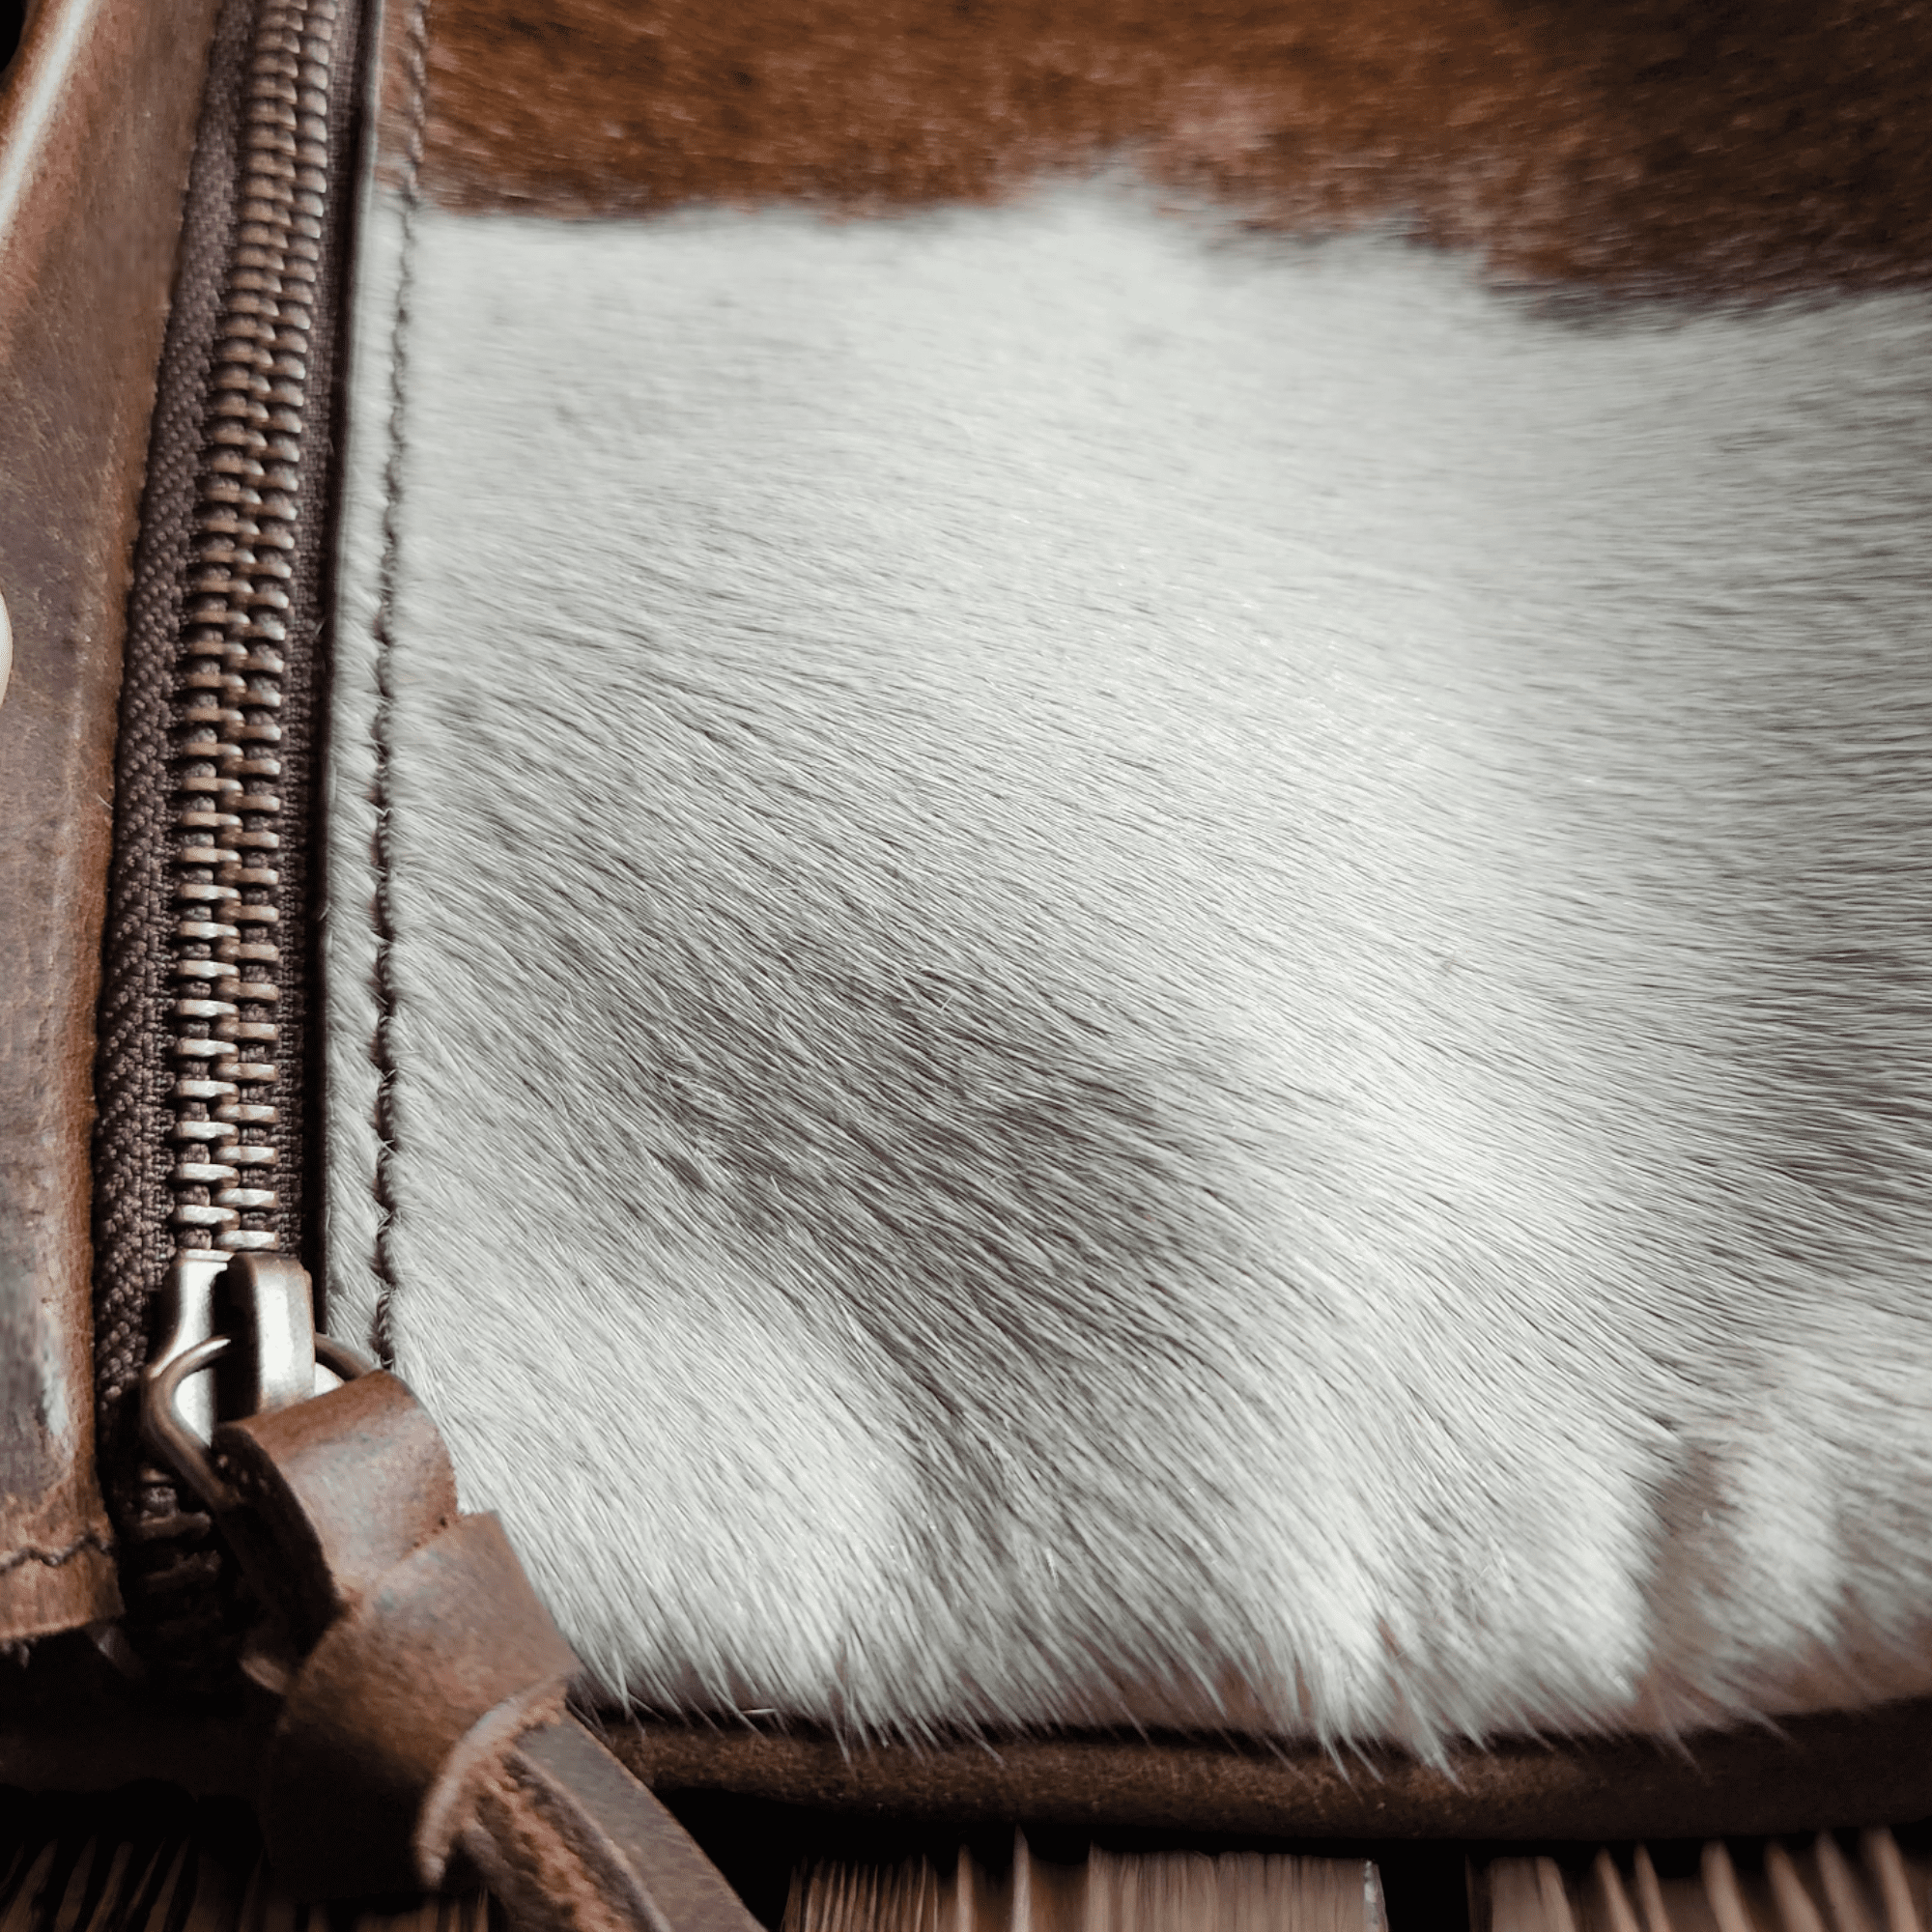 Highlands Mini Leather Backpack Cowhide Backpack - Ranch Junkie Mercantile LLC